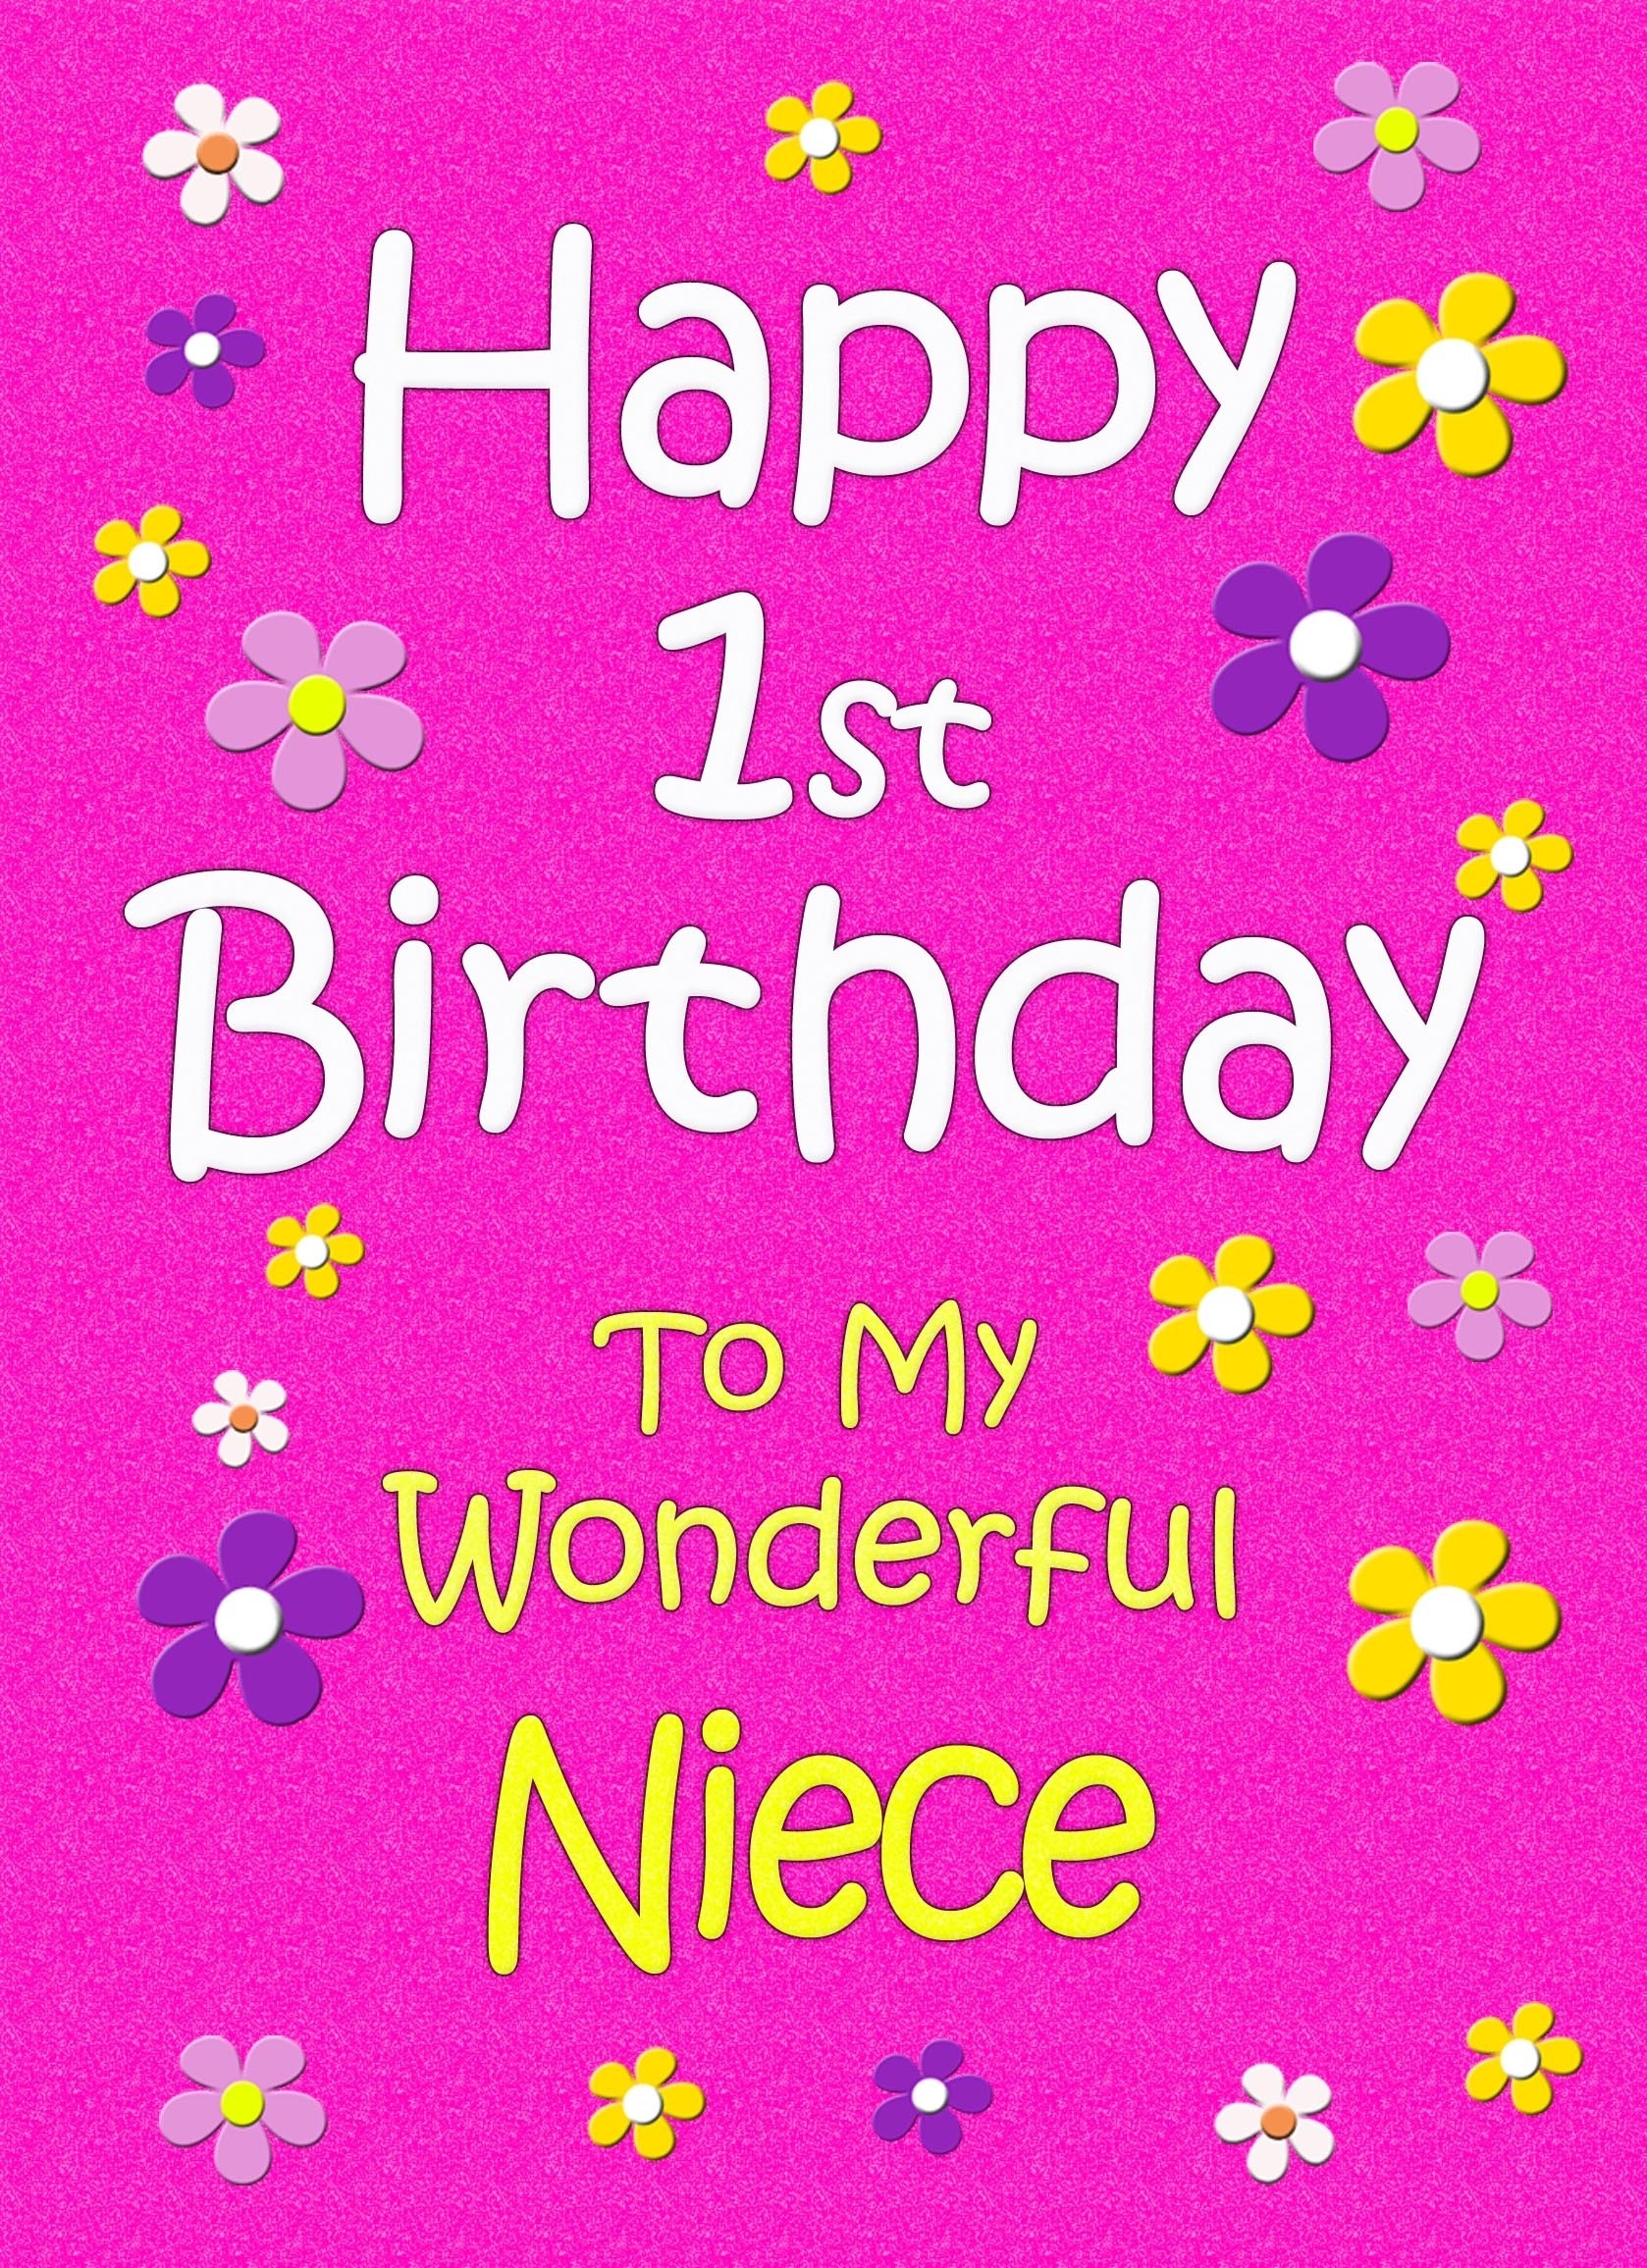 Niece 1st Birthday Card (Pink)